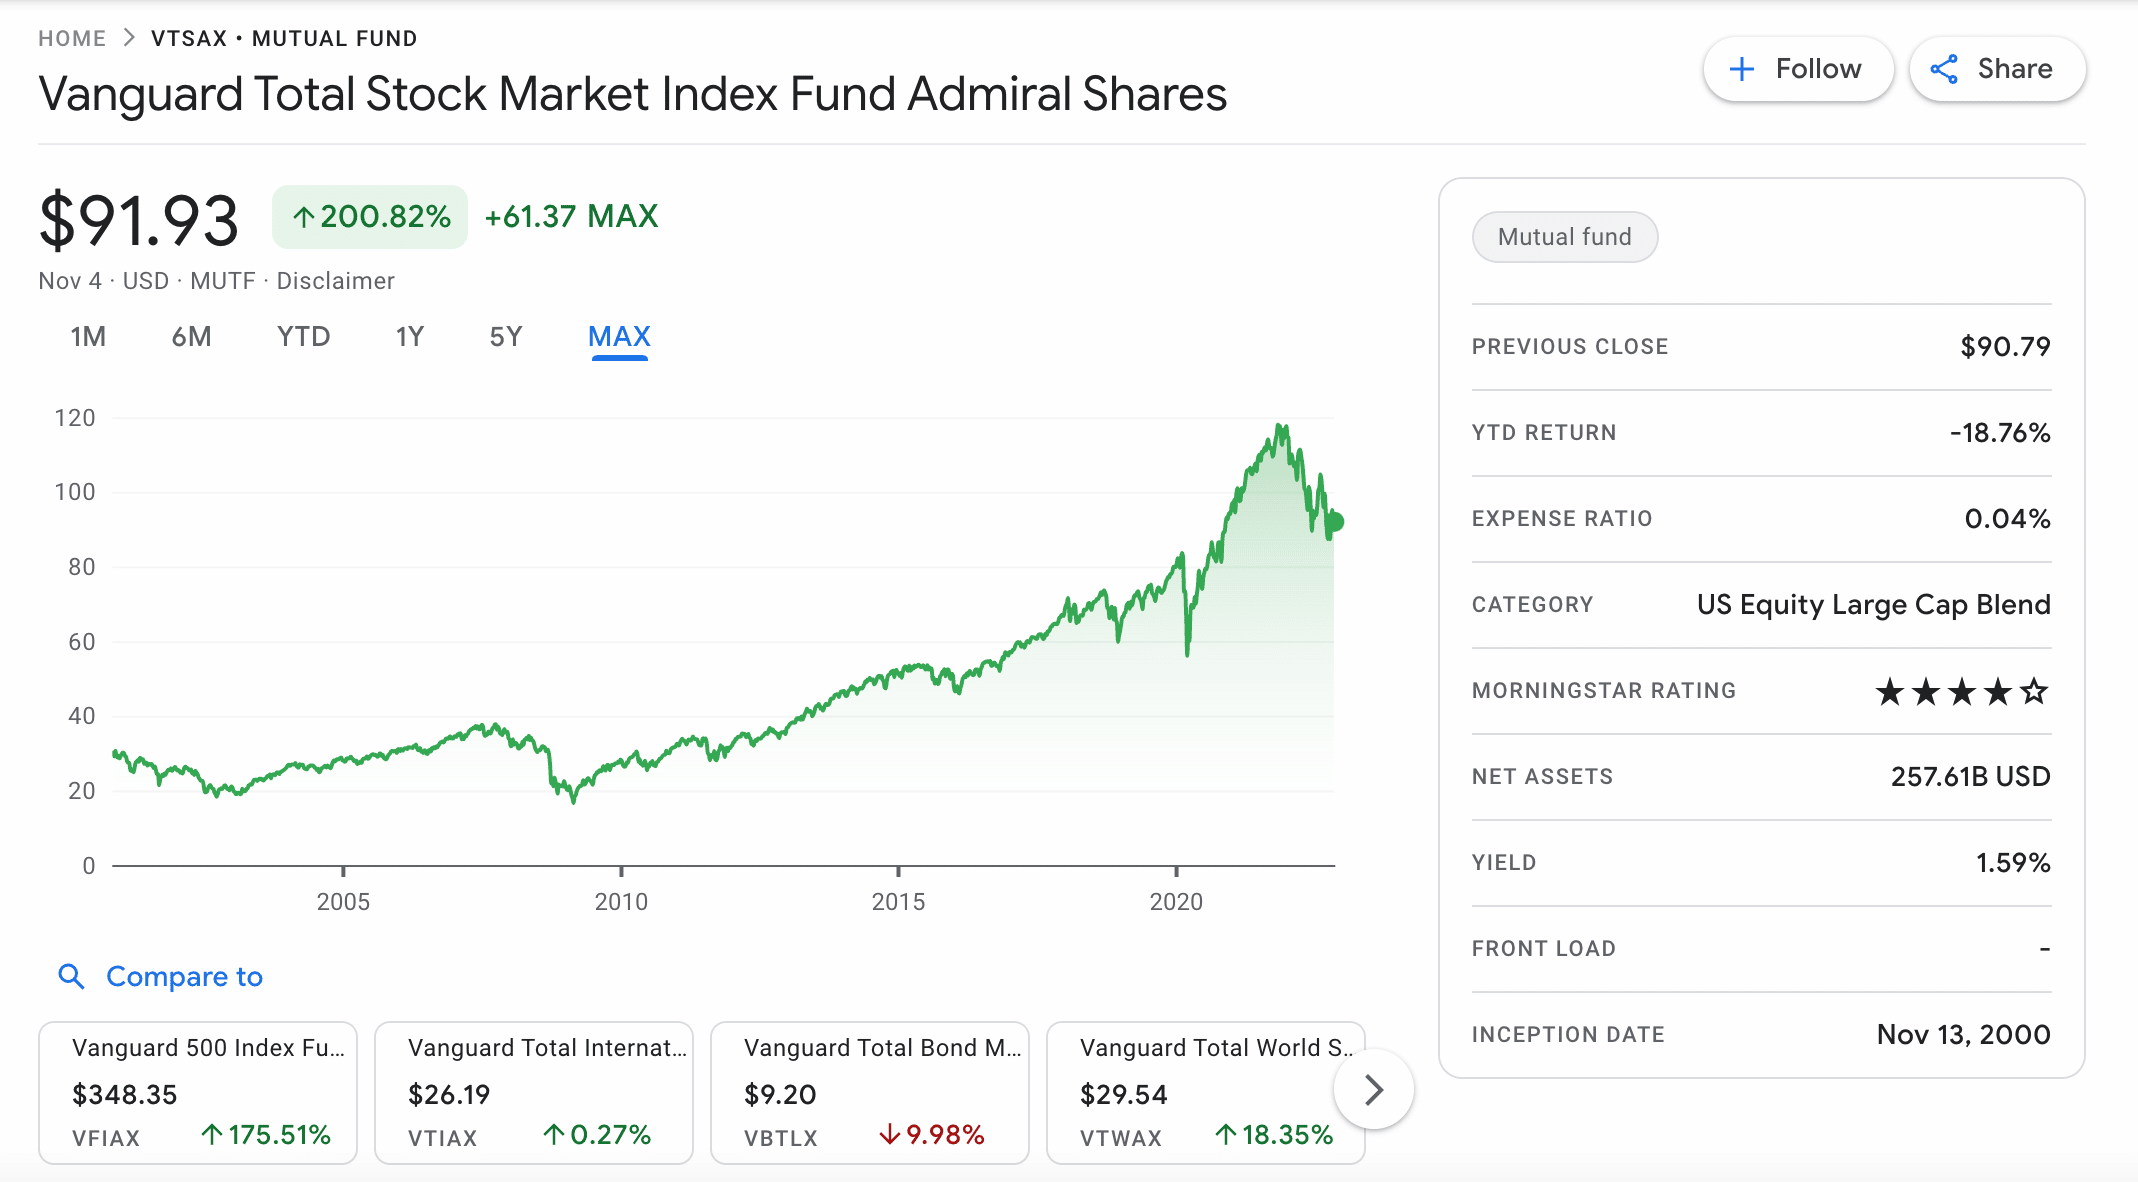 Vanguard Total Stock Market Index Fund Admiral Shares